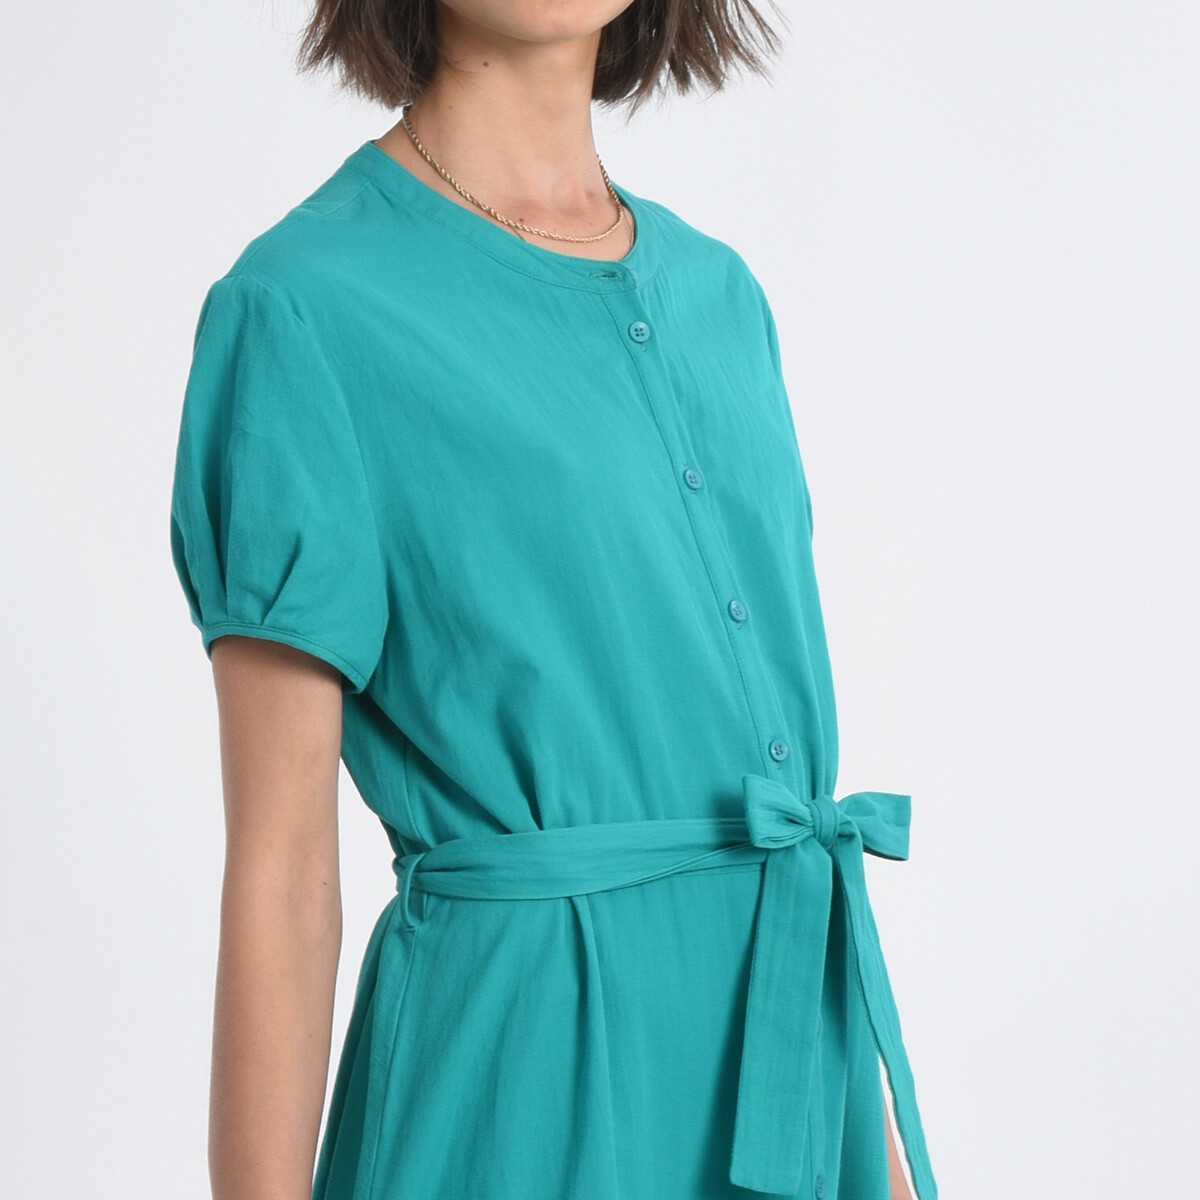 Платье Короткое на пуговицах пояс с завязками L зеленый LaRedoute, размер L - фото 3